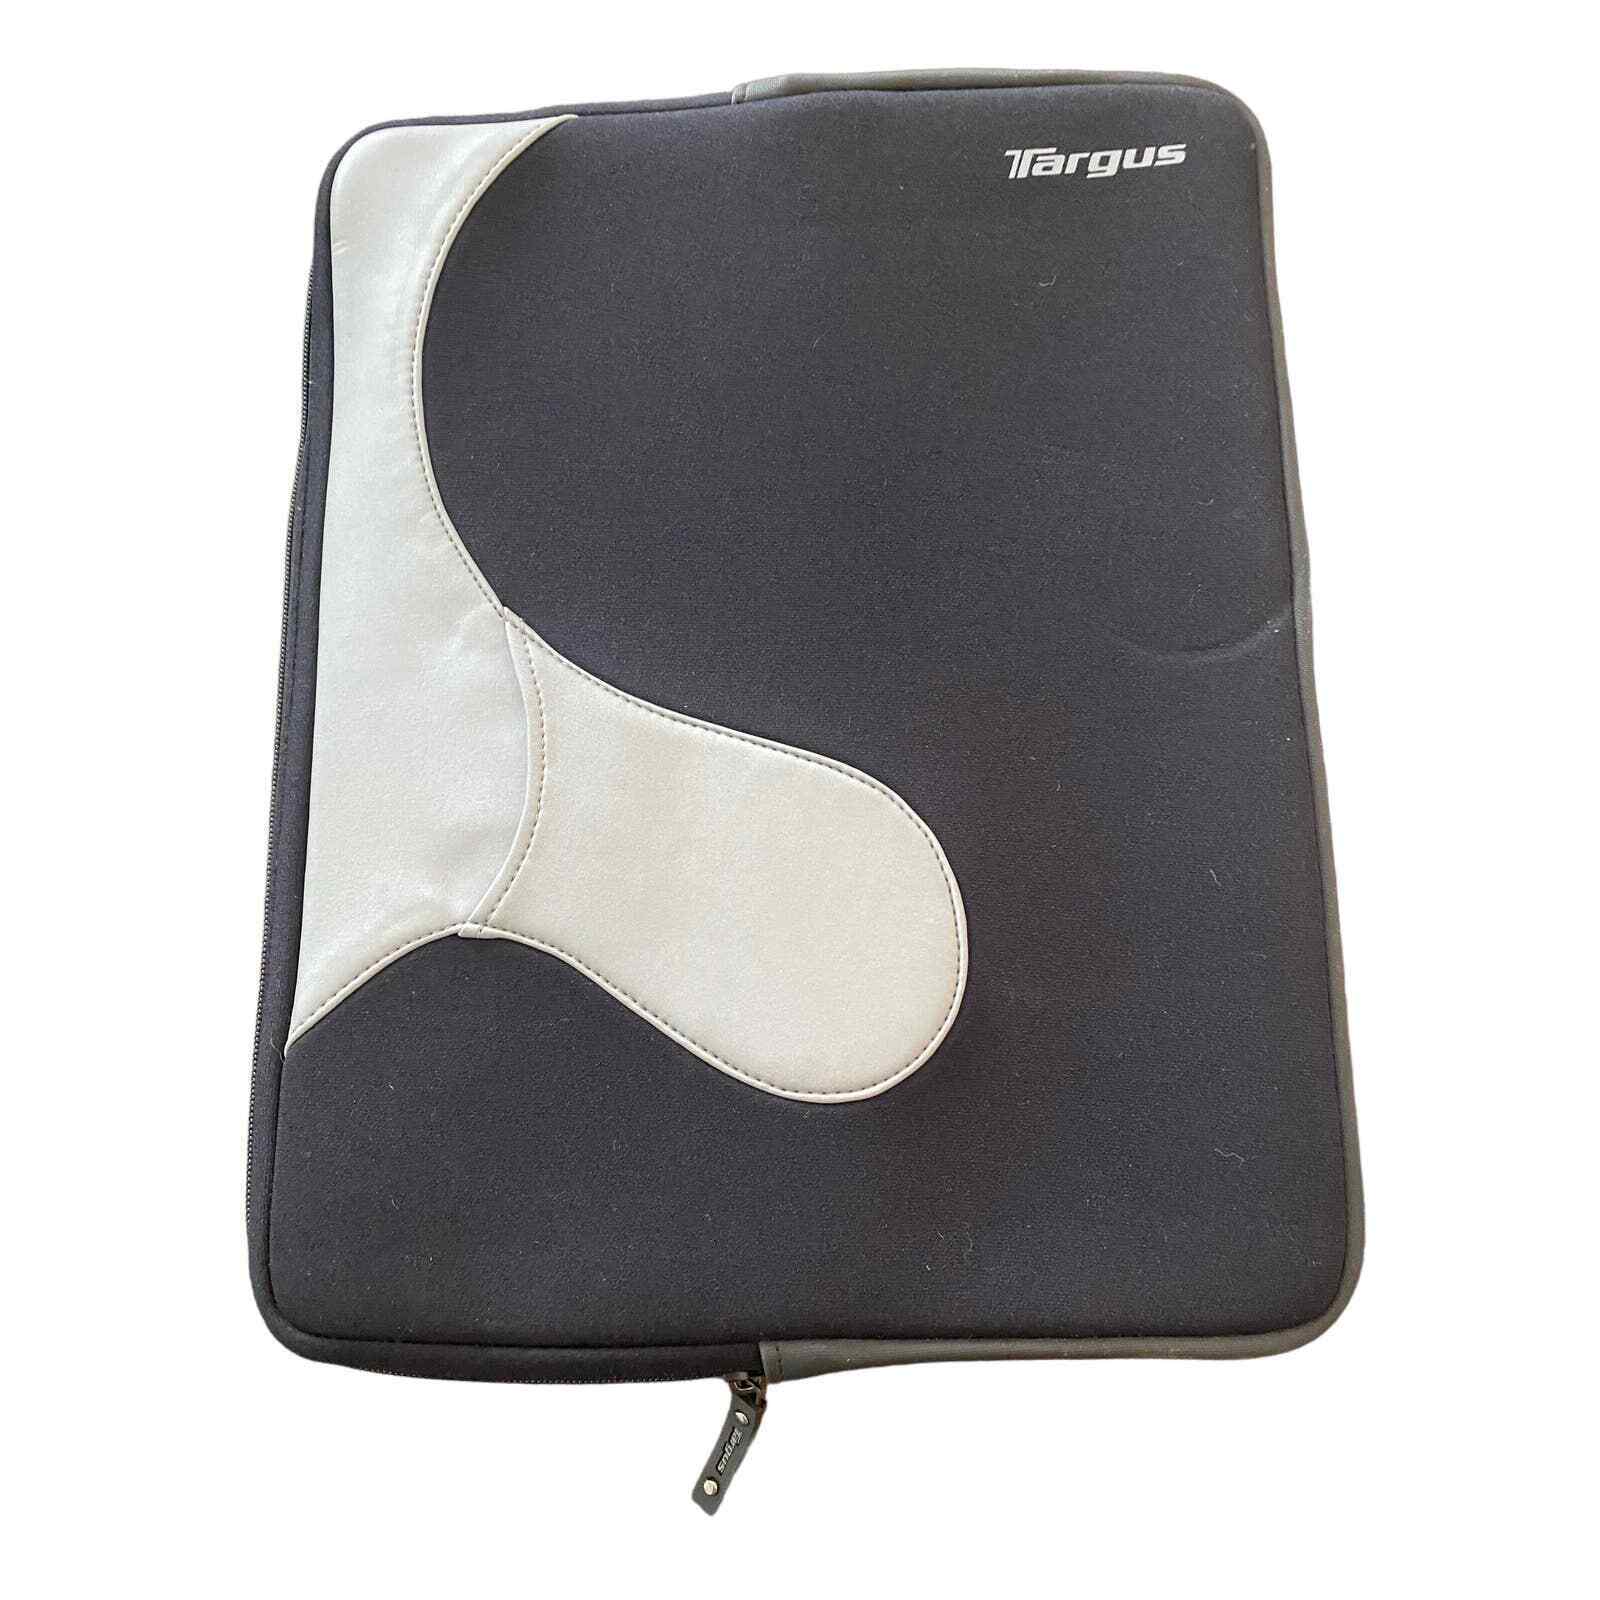 New Targus black Neoprene and gray leather laptop sleeve case zip-up 15